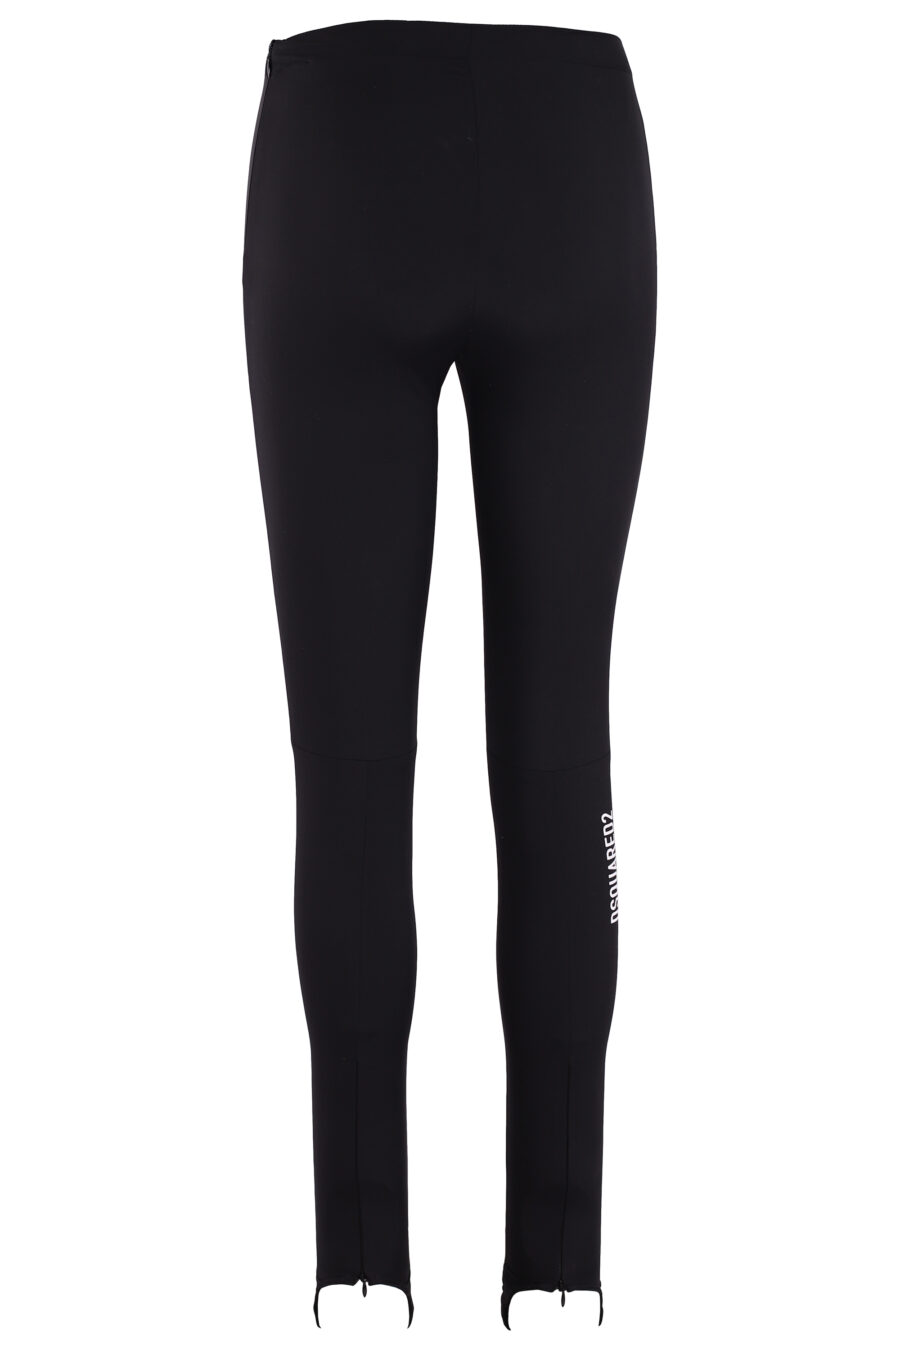 Black leggings with vertical "icon" logo - IMG 3712